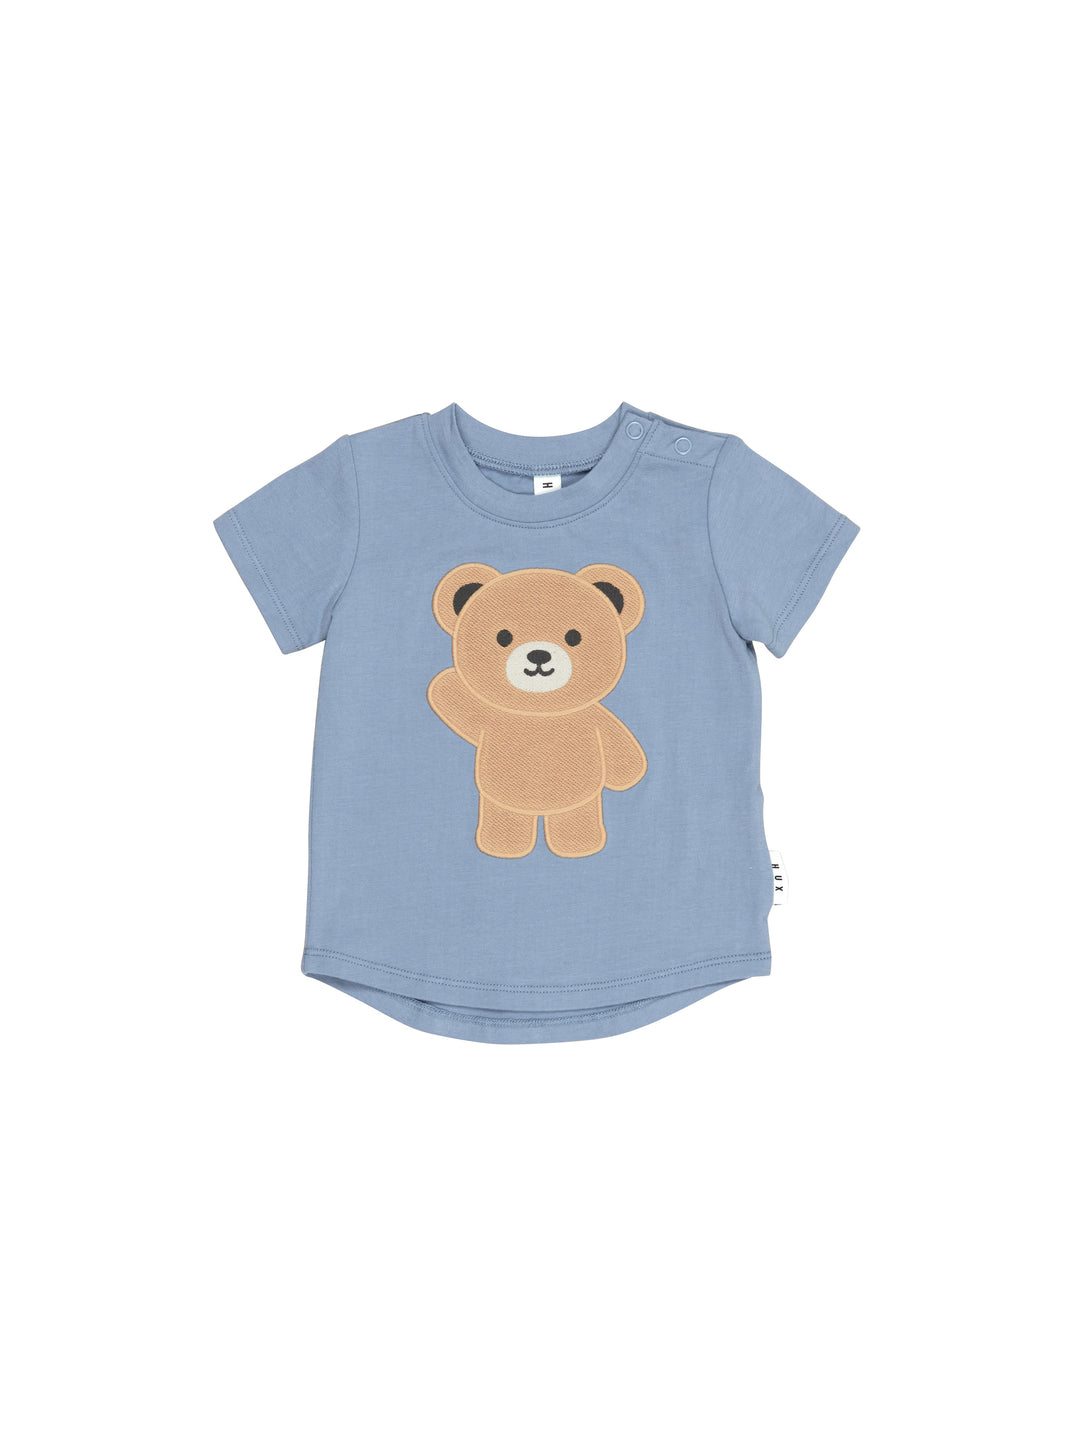 Huxbaby Hello Hux T-Shirt, Lake |Mockingbird Baby & Kids